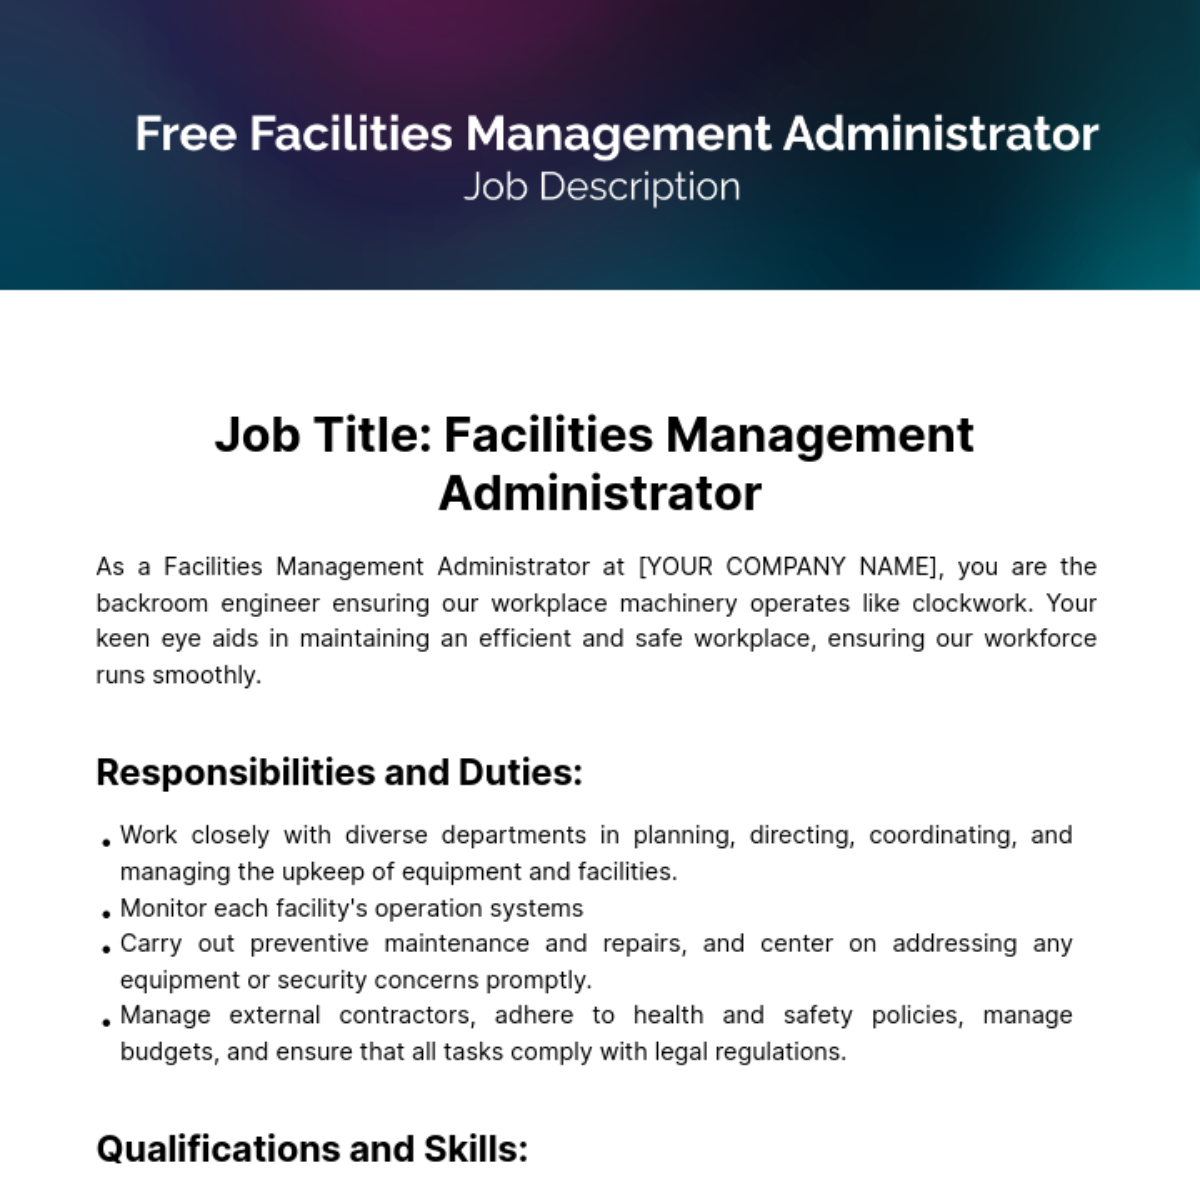 Free Facilities Management Administrator Job Description Template